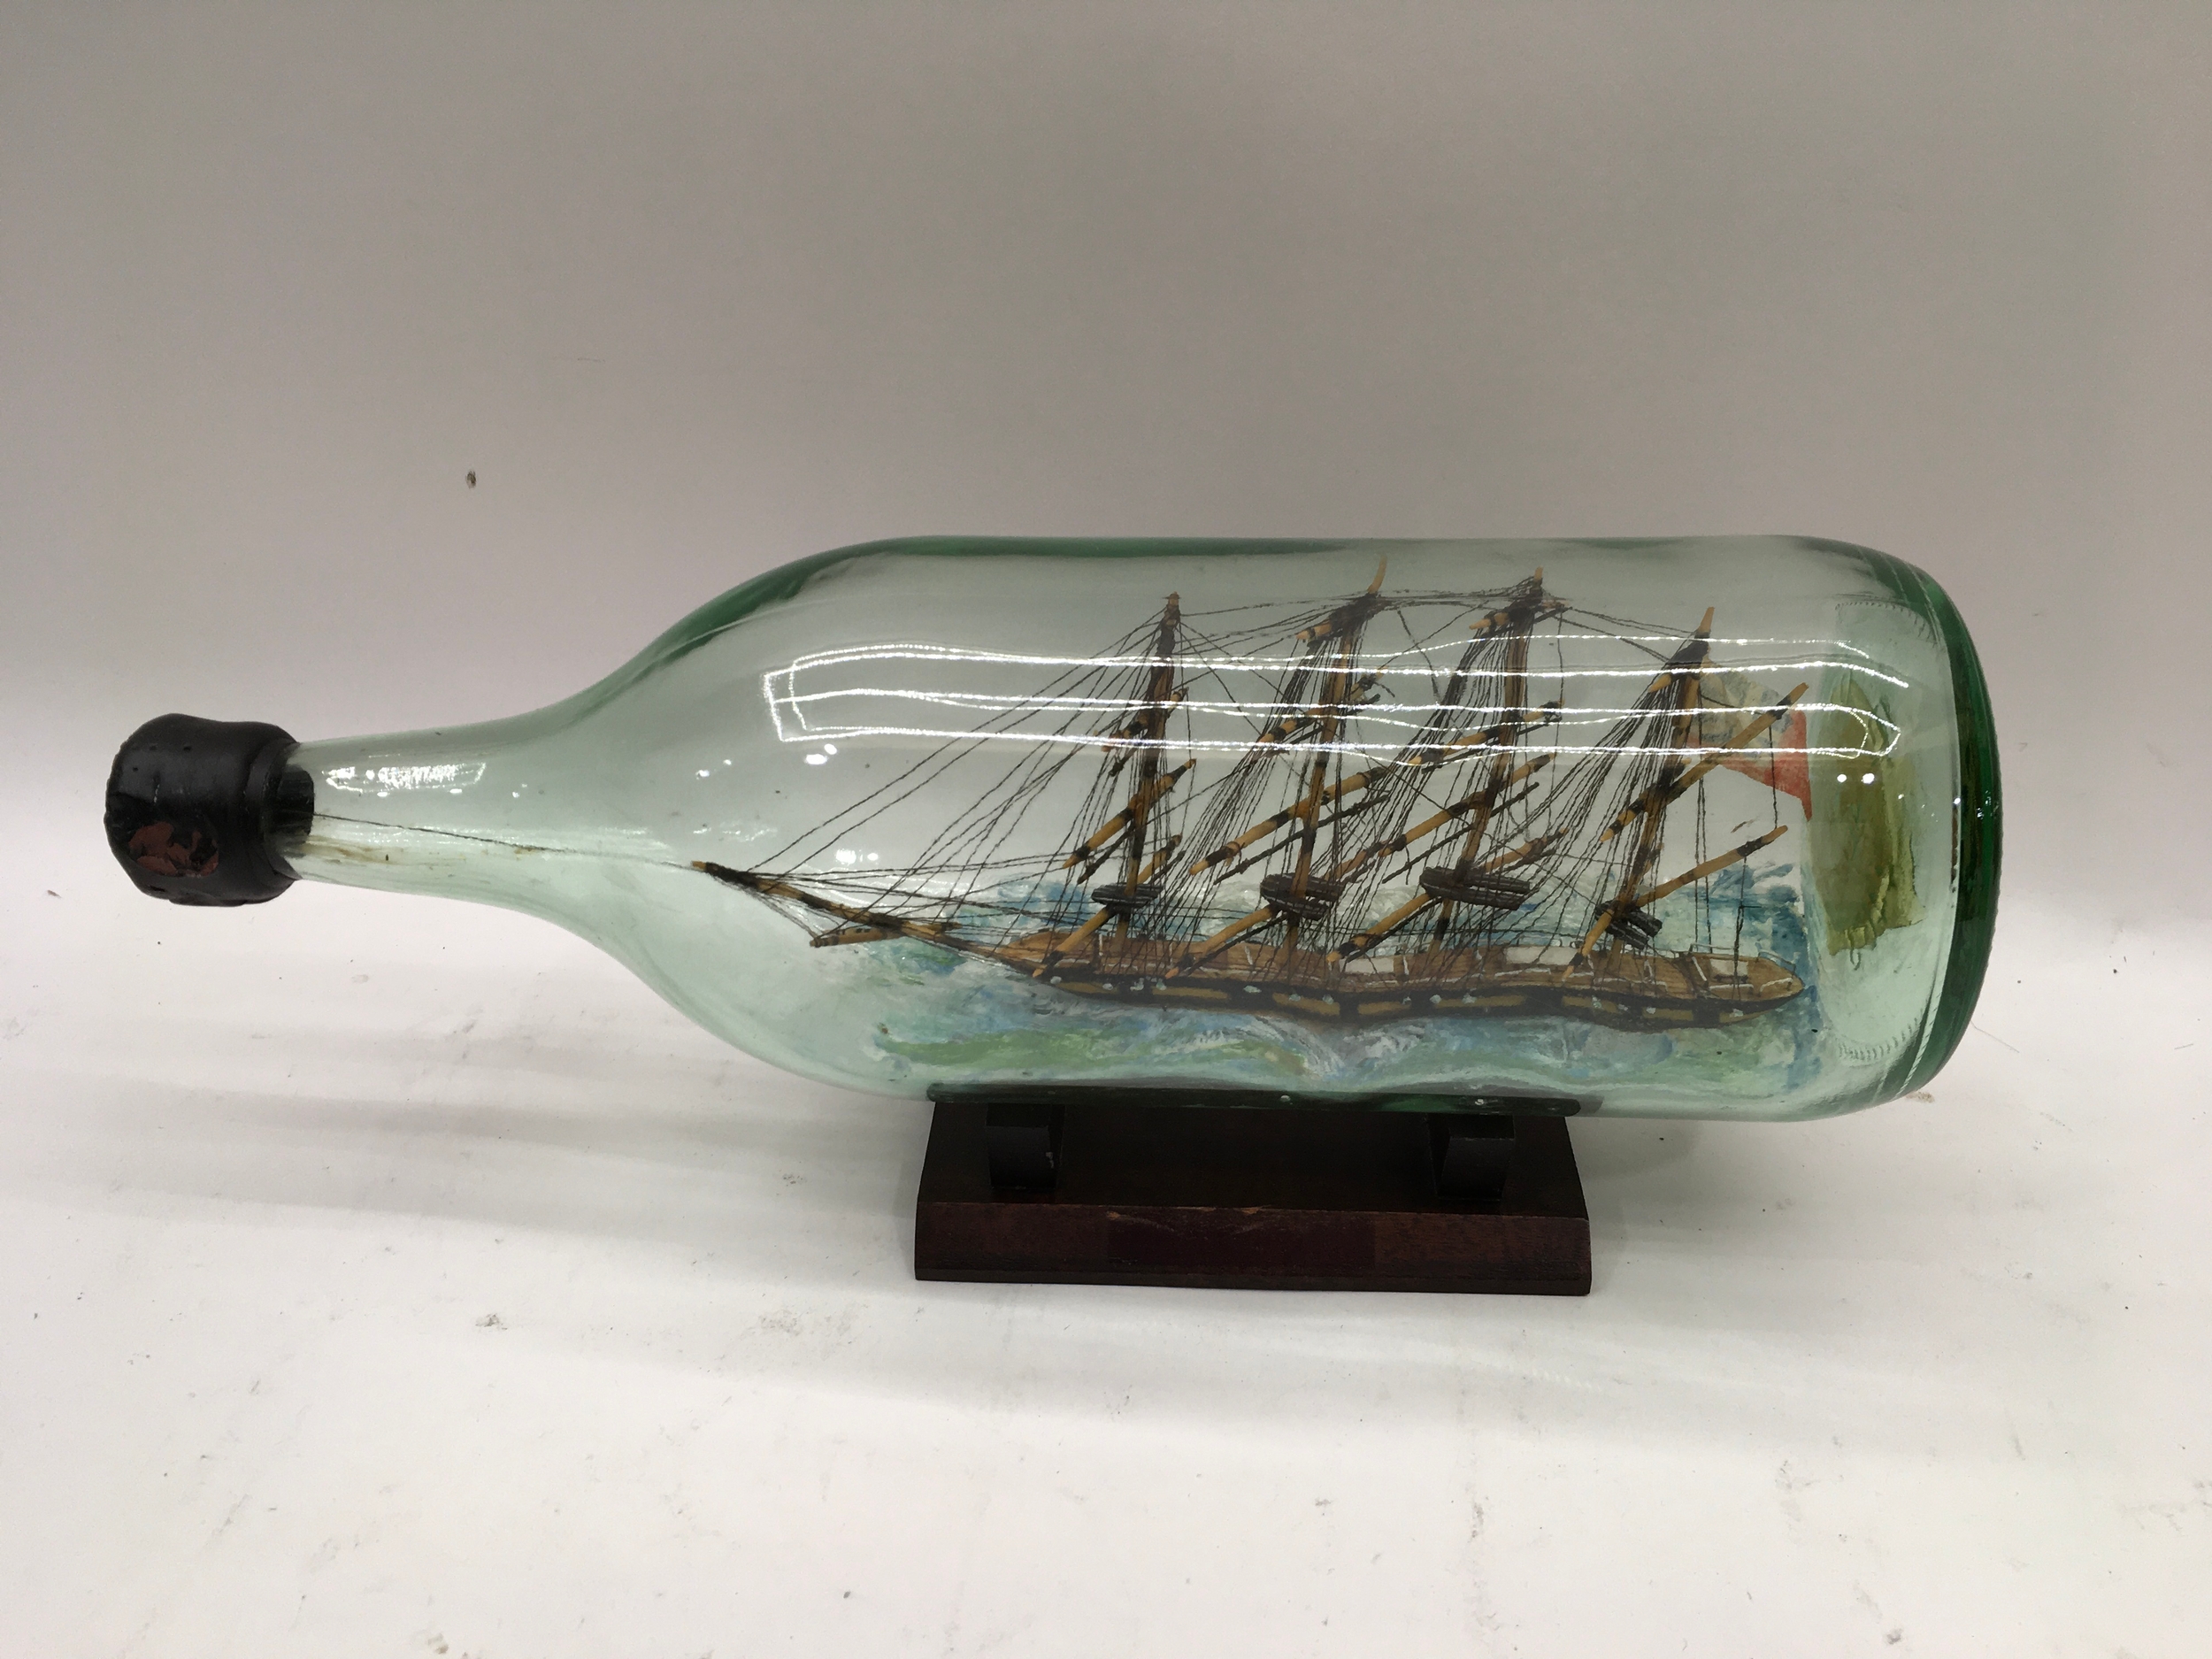 A ship in a glass bottle.